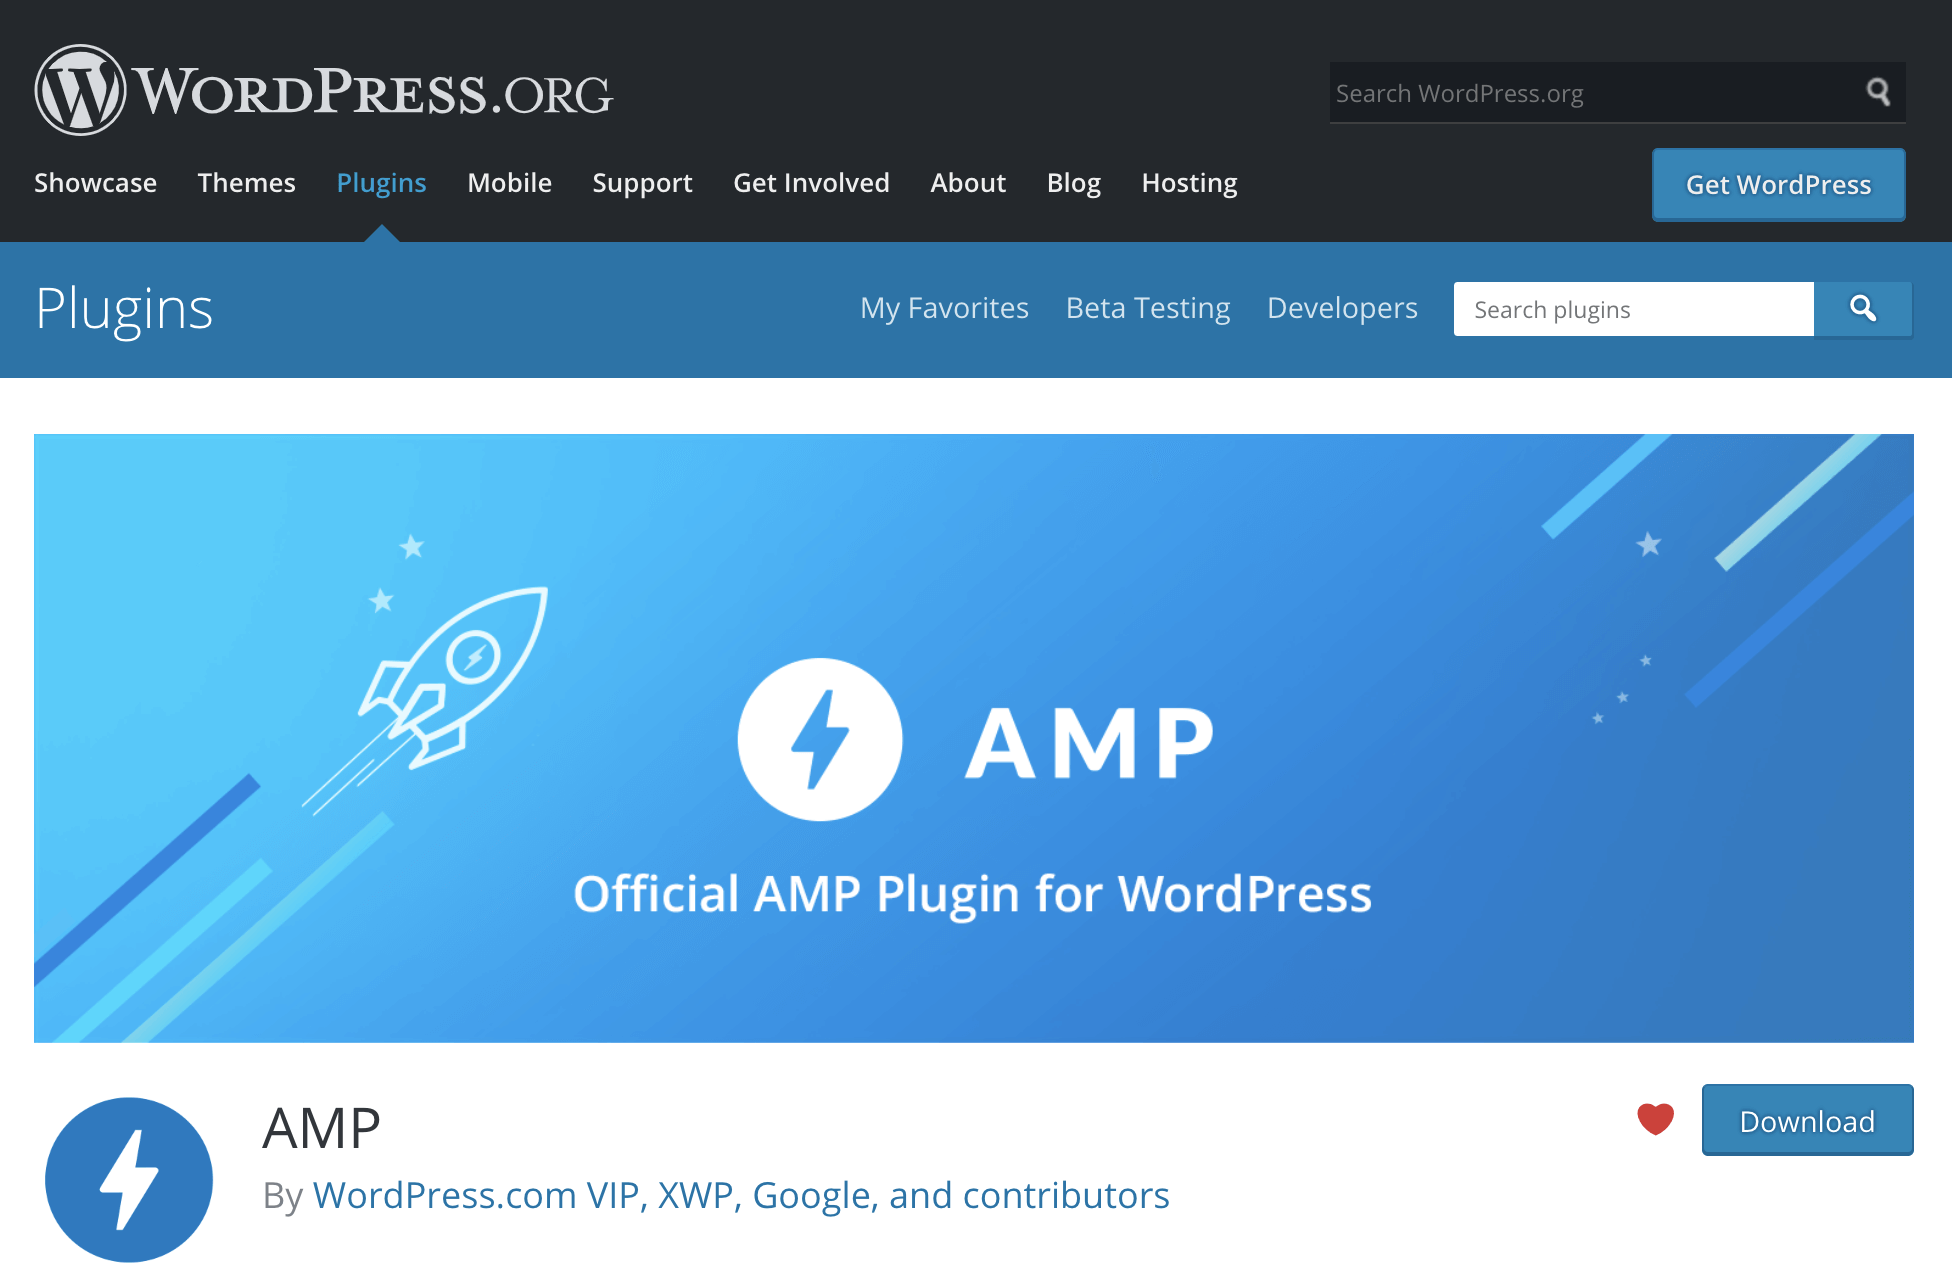 The AMP for WordPress Plugin